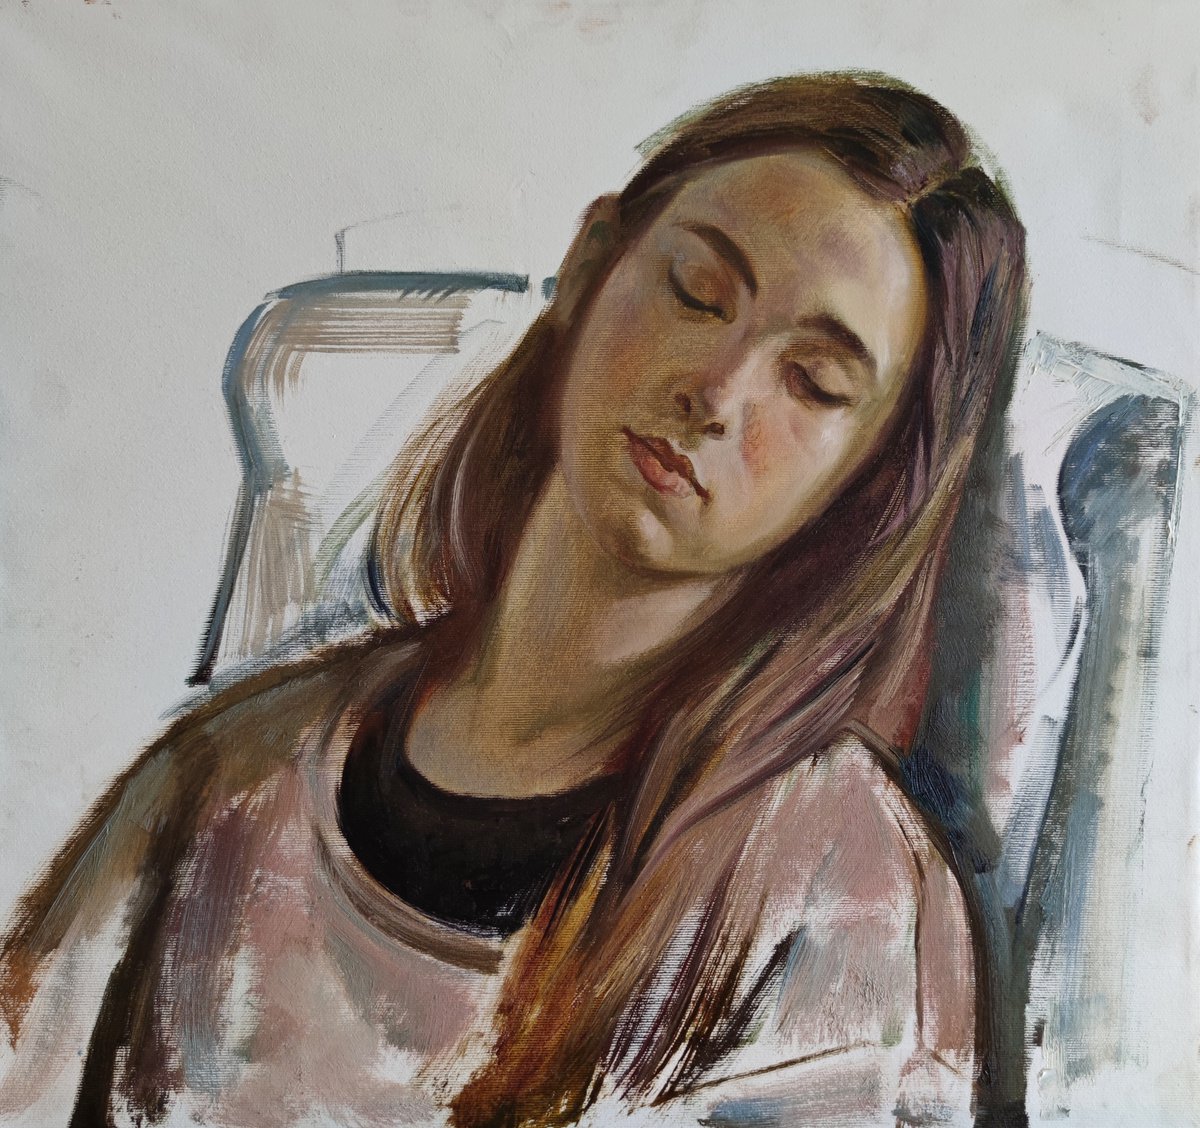 Sleeping sister. by Maria Egorova